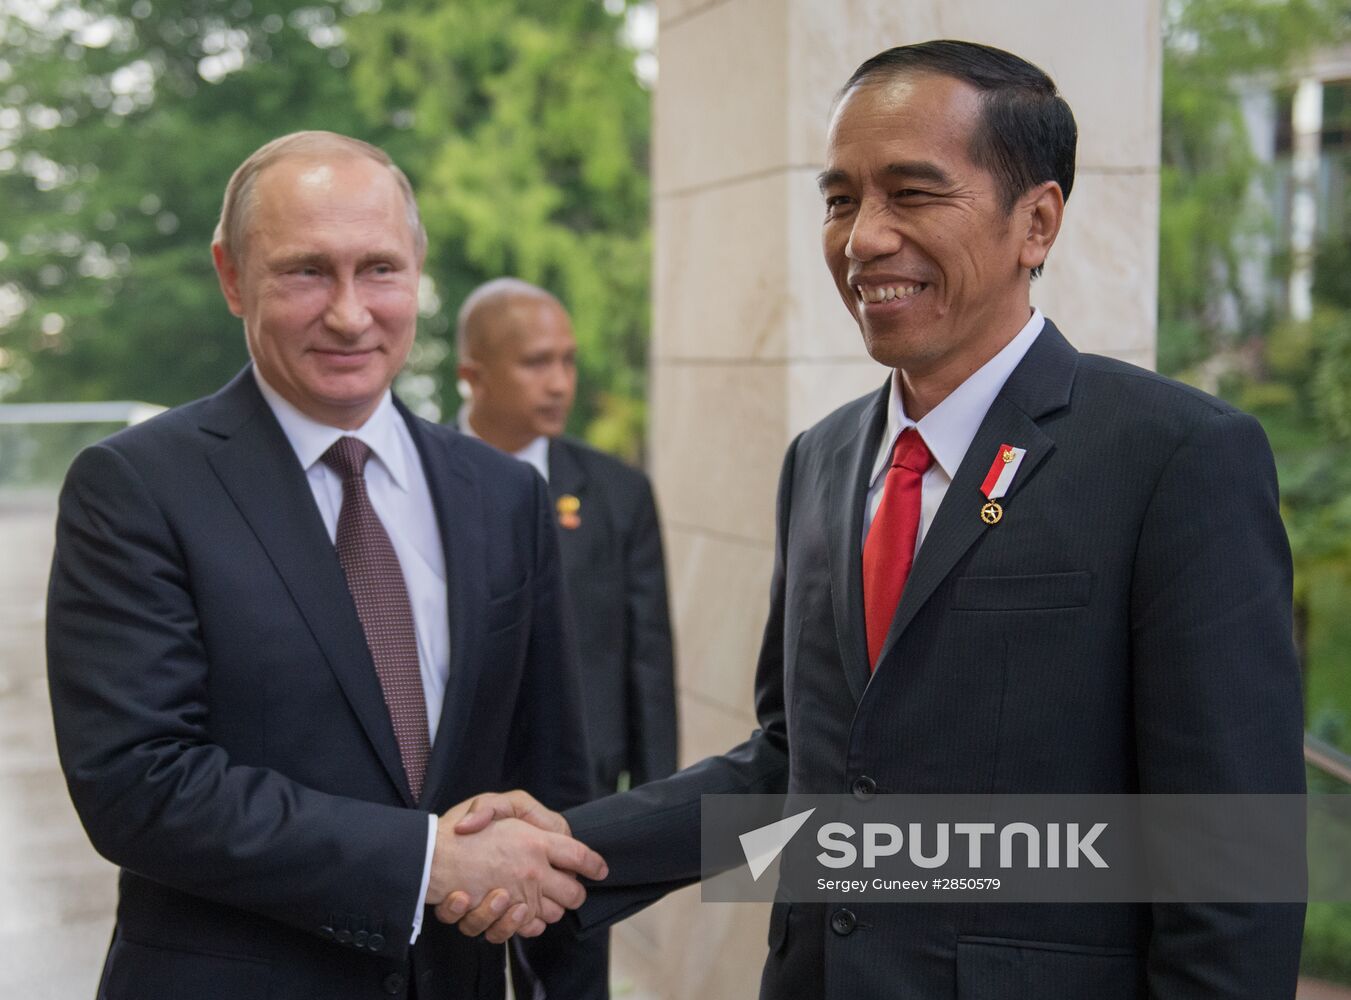 Vladimir Putin's limited attendance meeting with President of Indonesia Joko Widodo